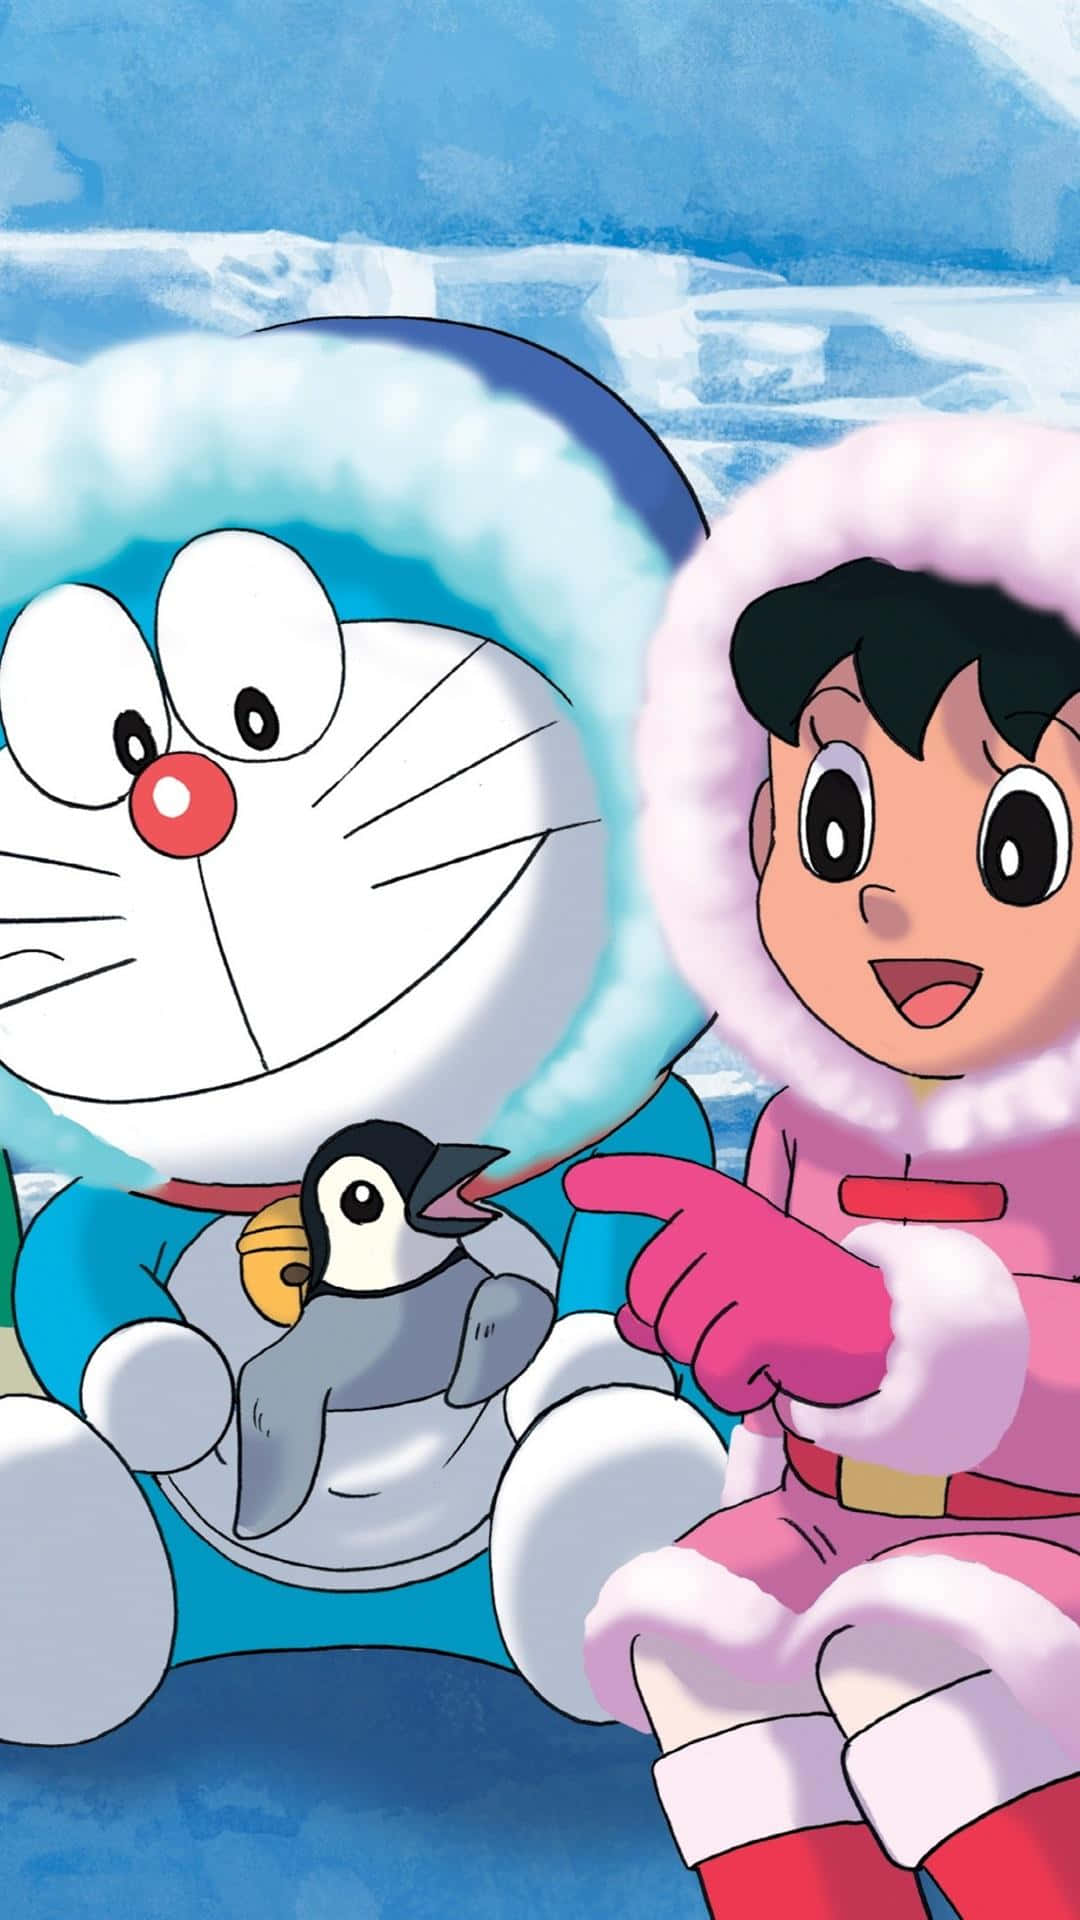 Sjoveeventyr Venter I Den Magiske Verden Af Doraemon.